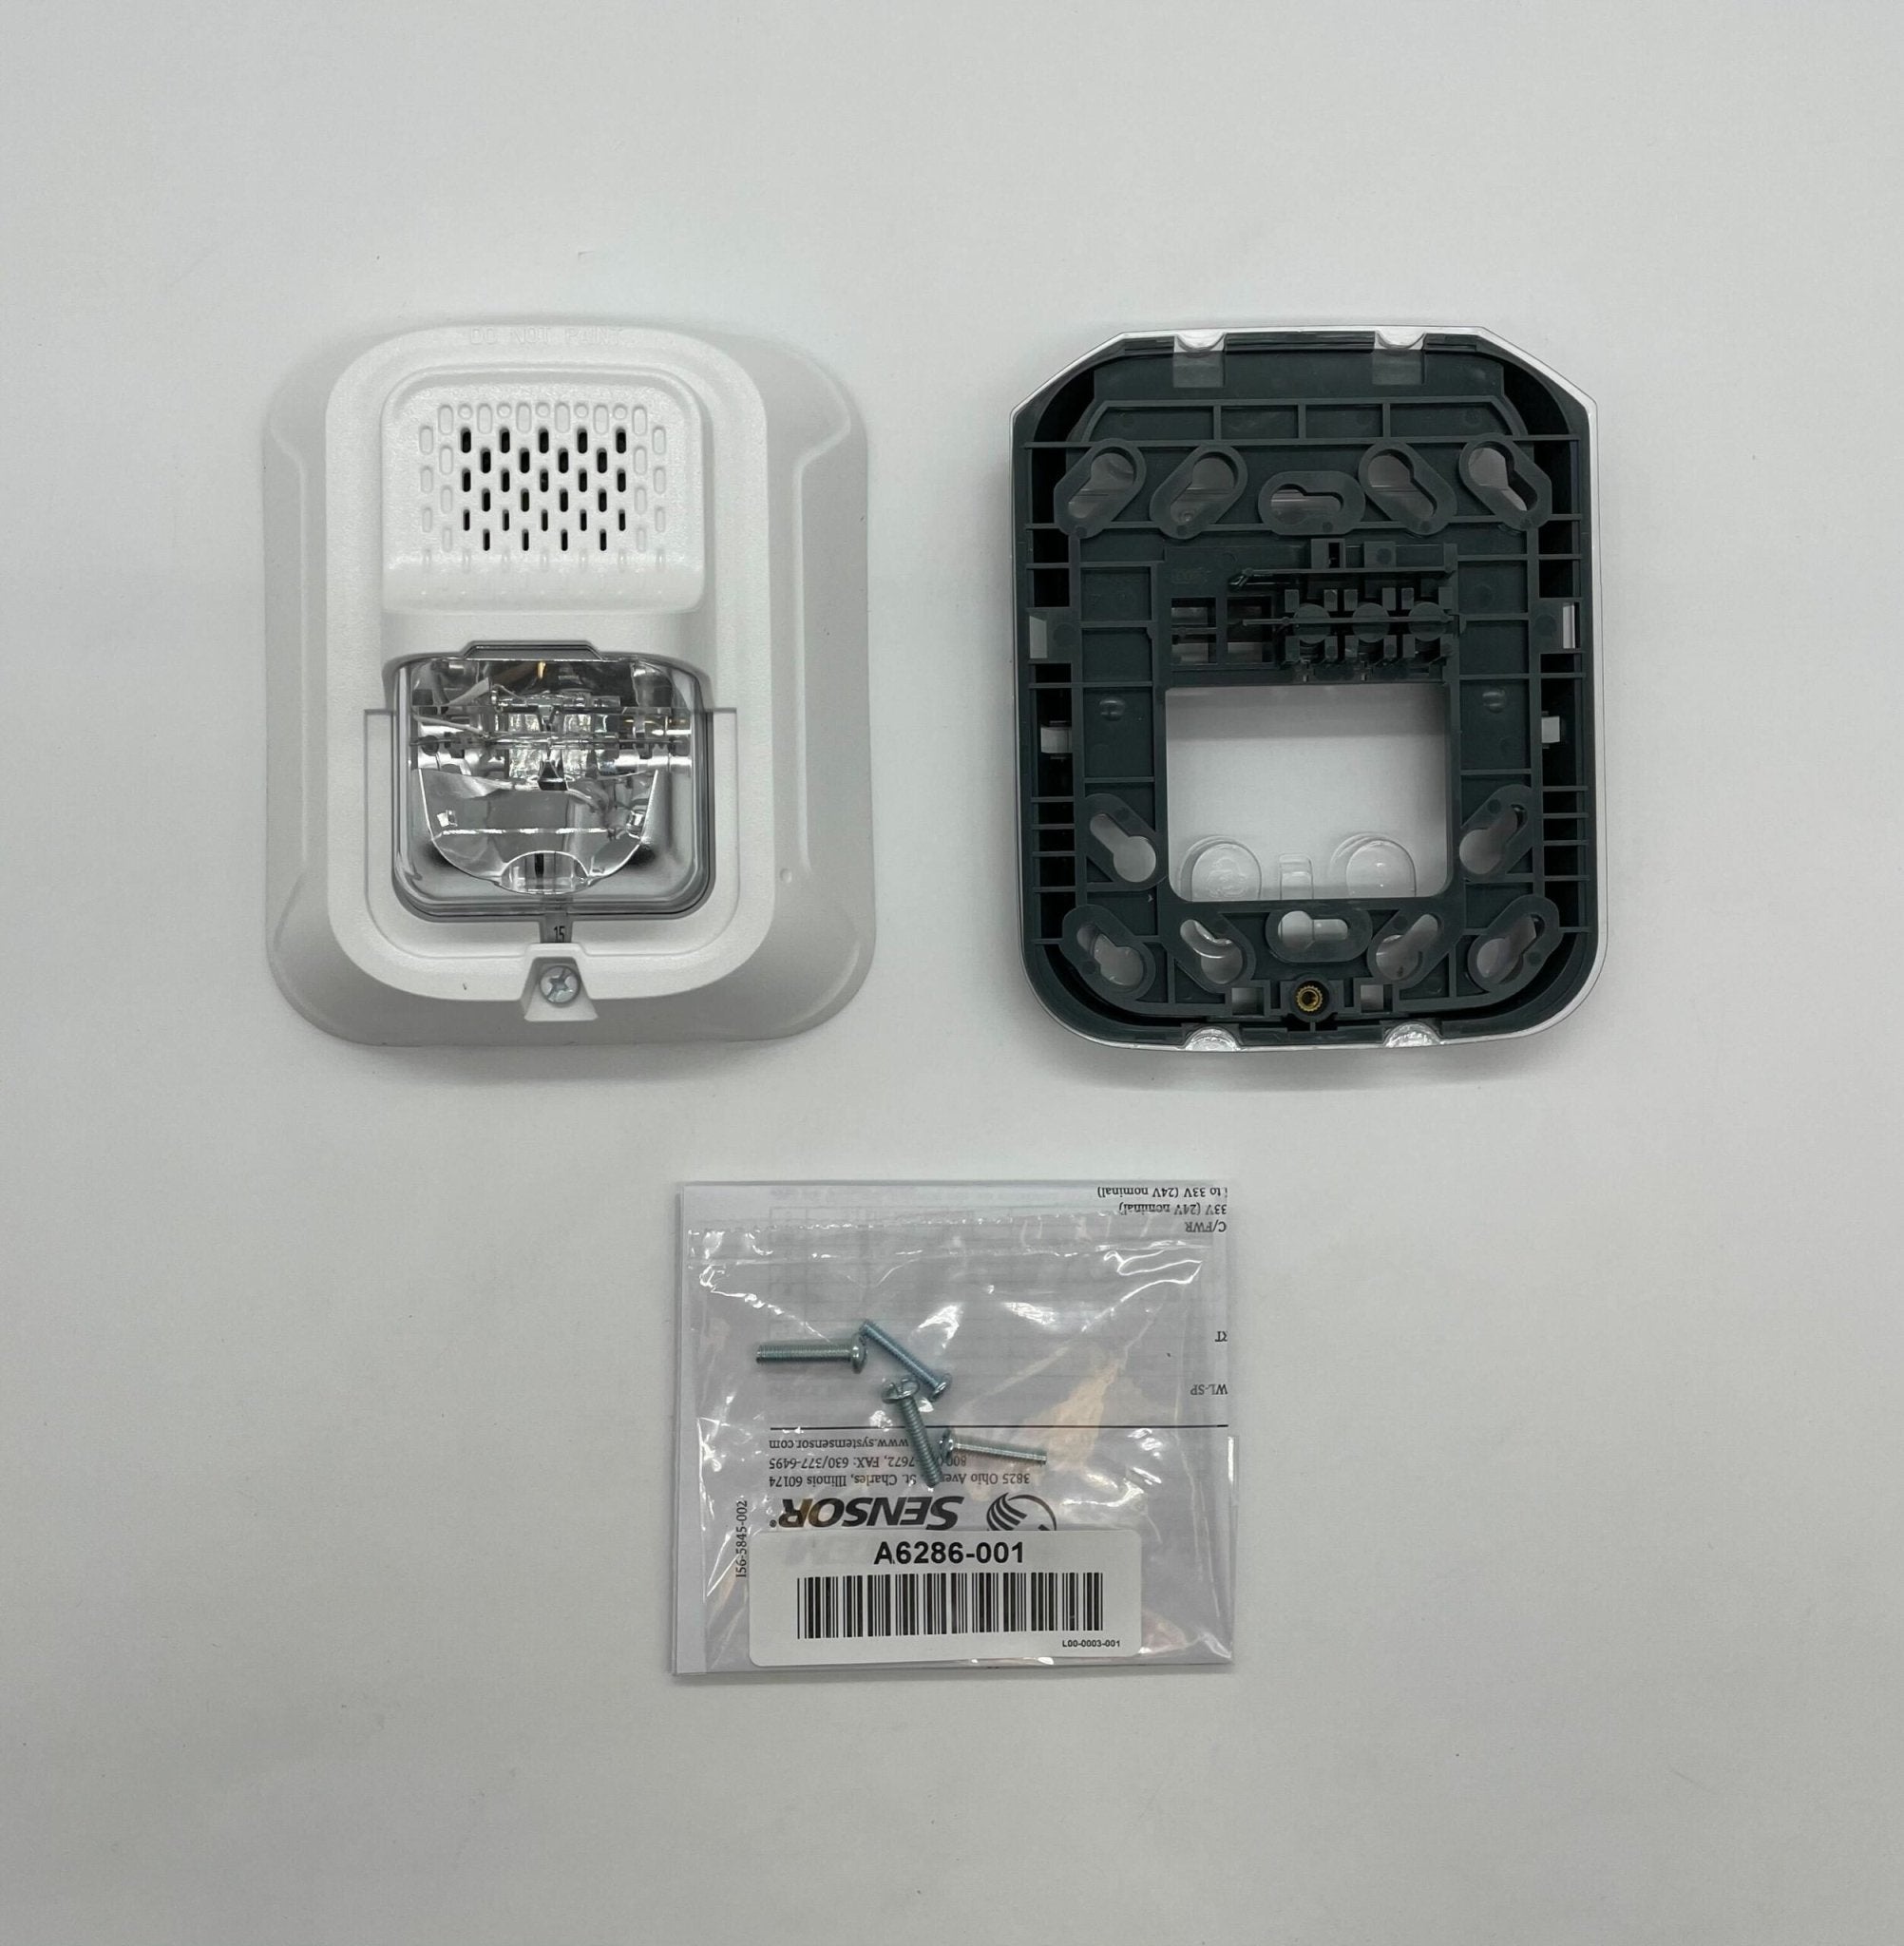 System Sensor CHSWL - The Fire Alarm Supplier